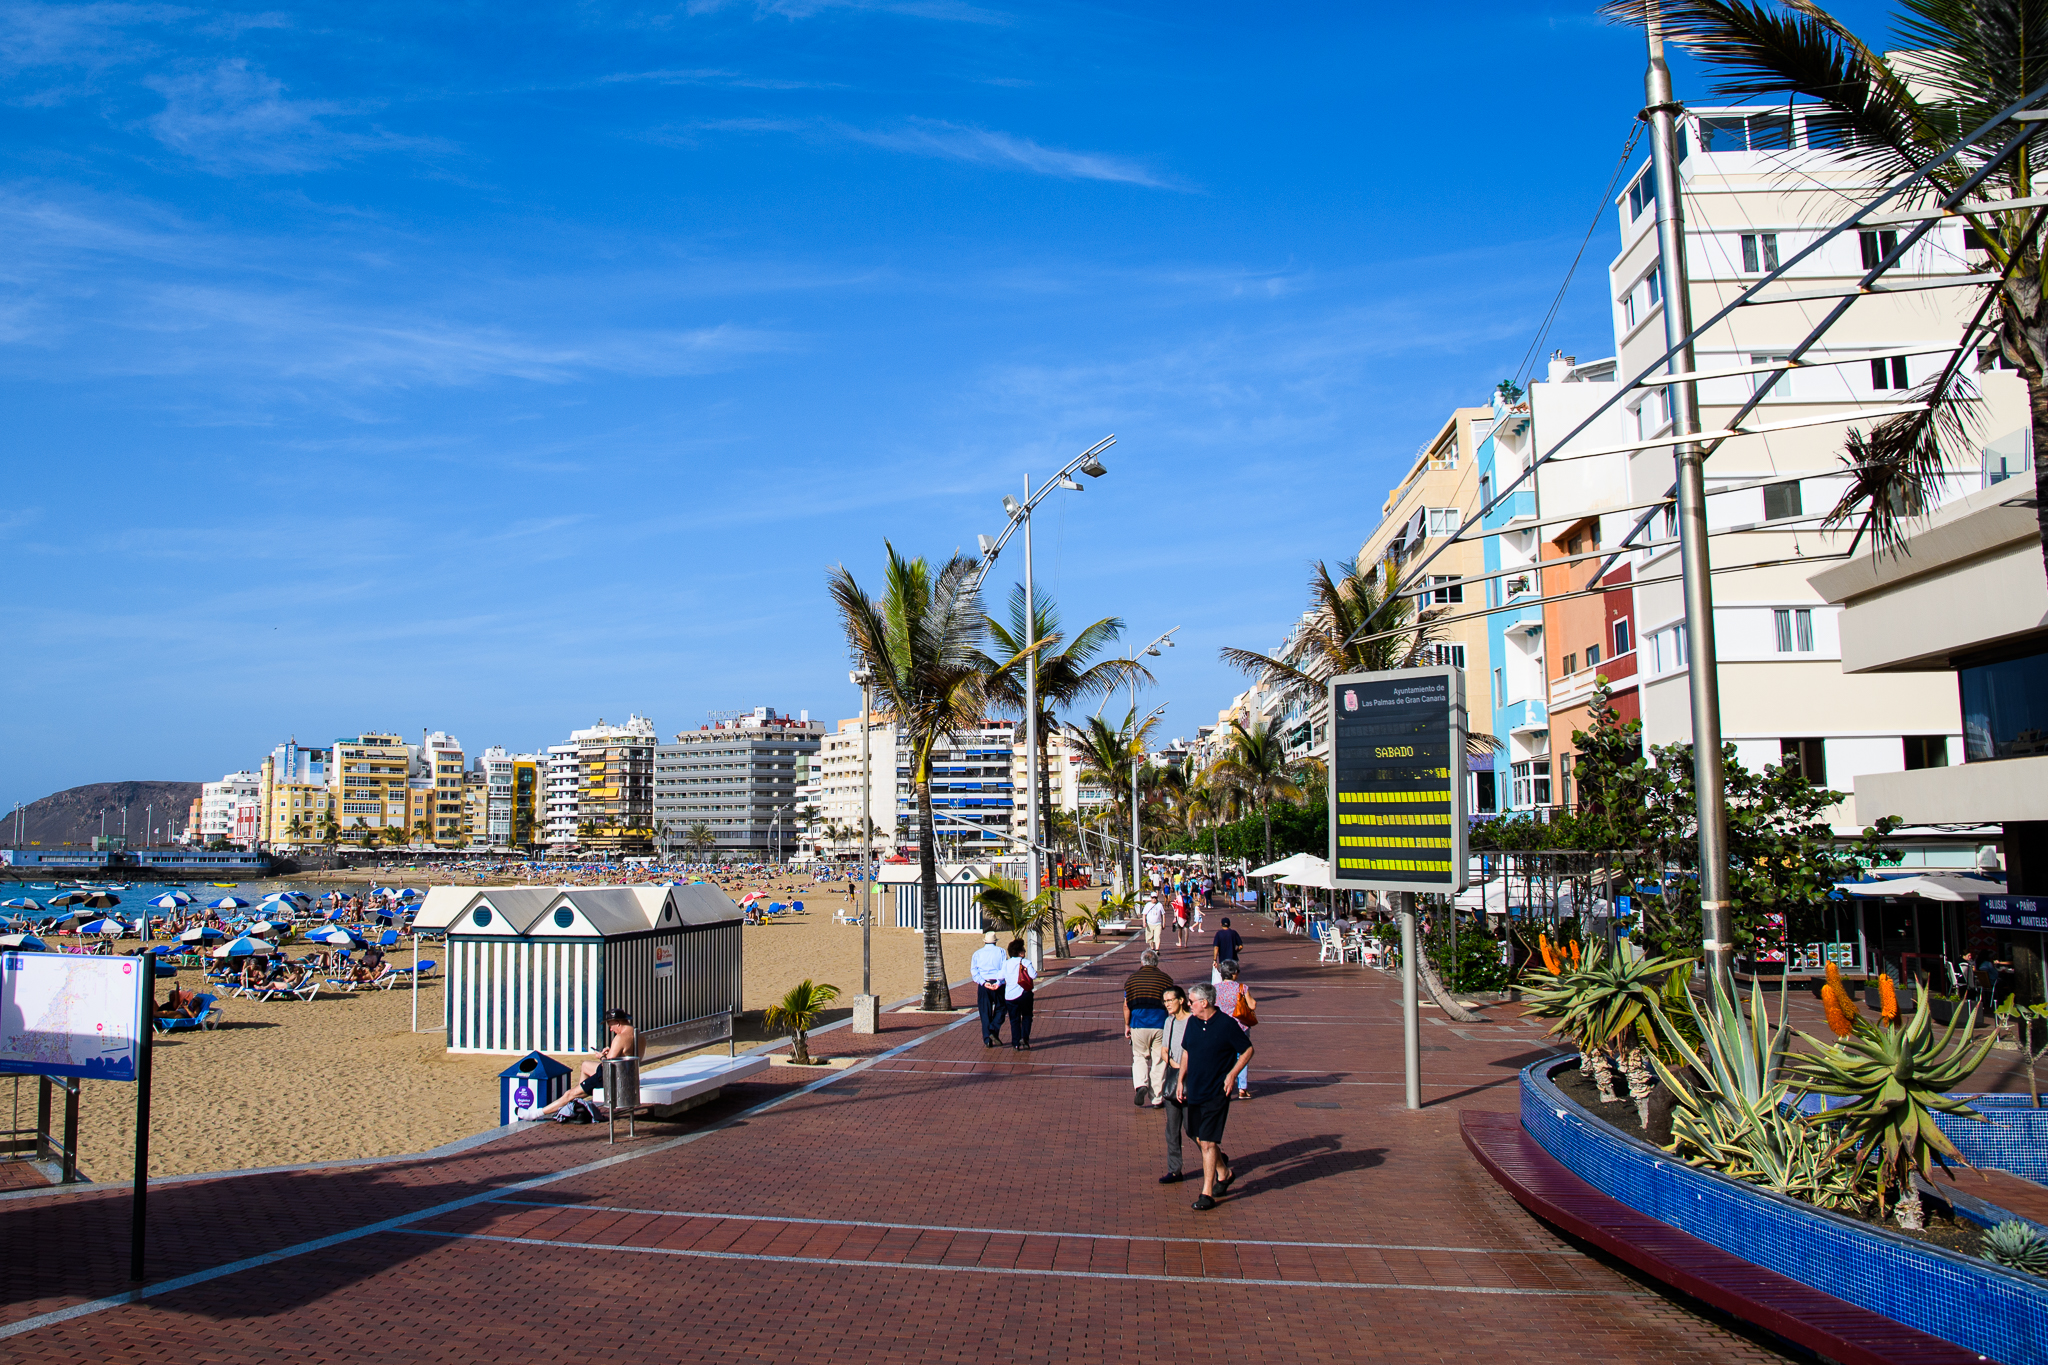 The beachfront promenade at Playa de las Canteras.